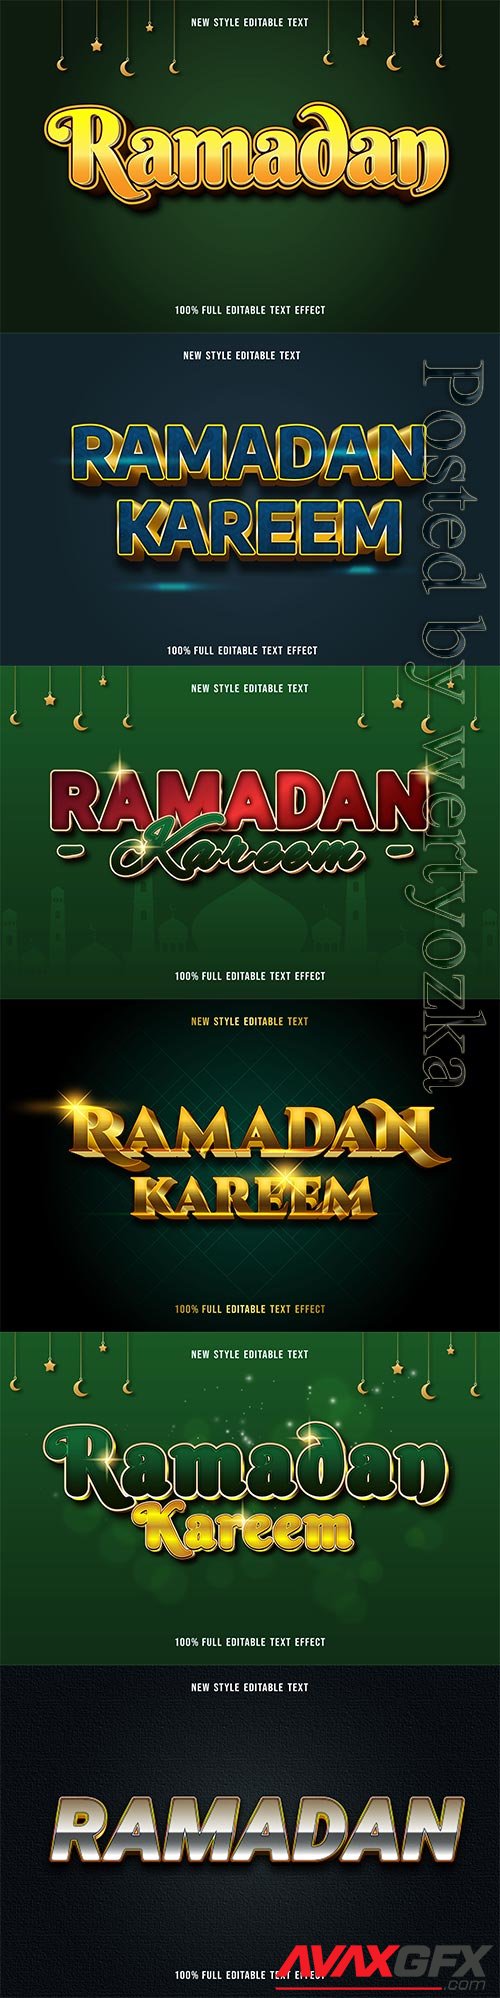 Ramadan kareem, eid mubarak vector text effect vol 3